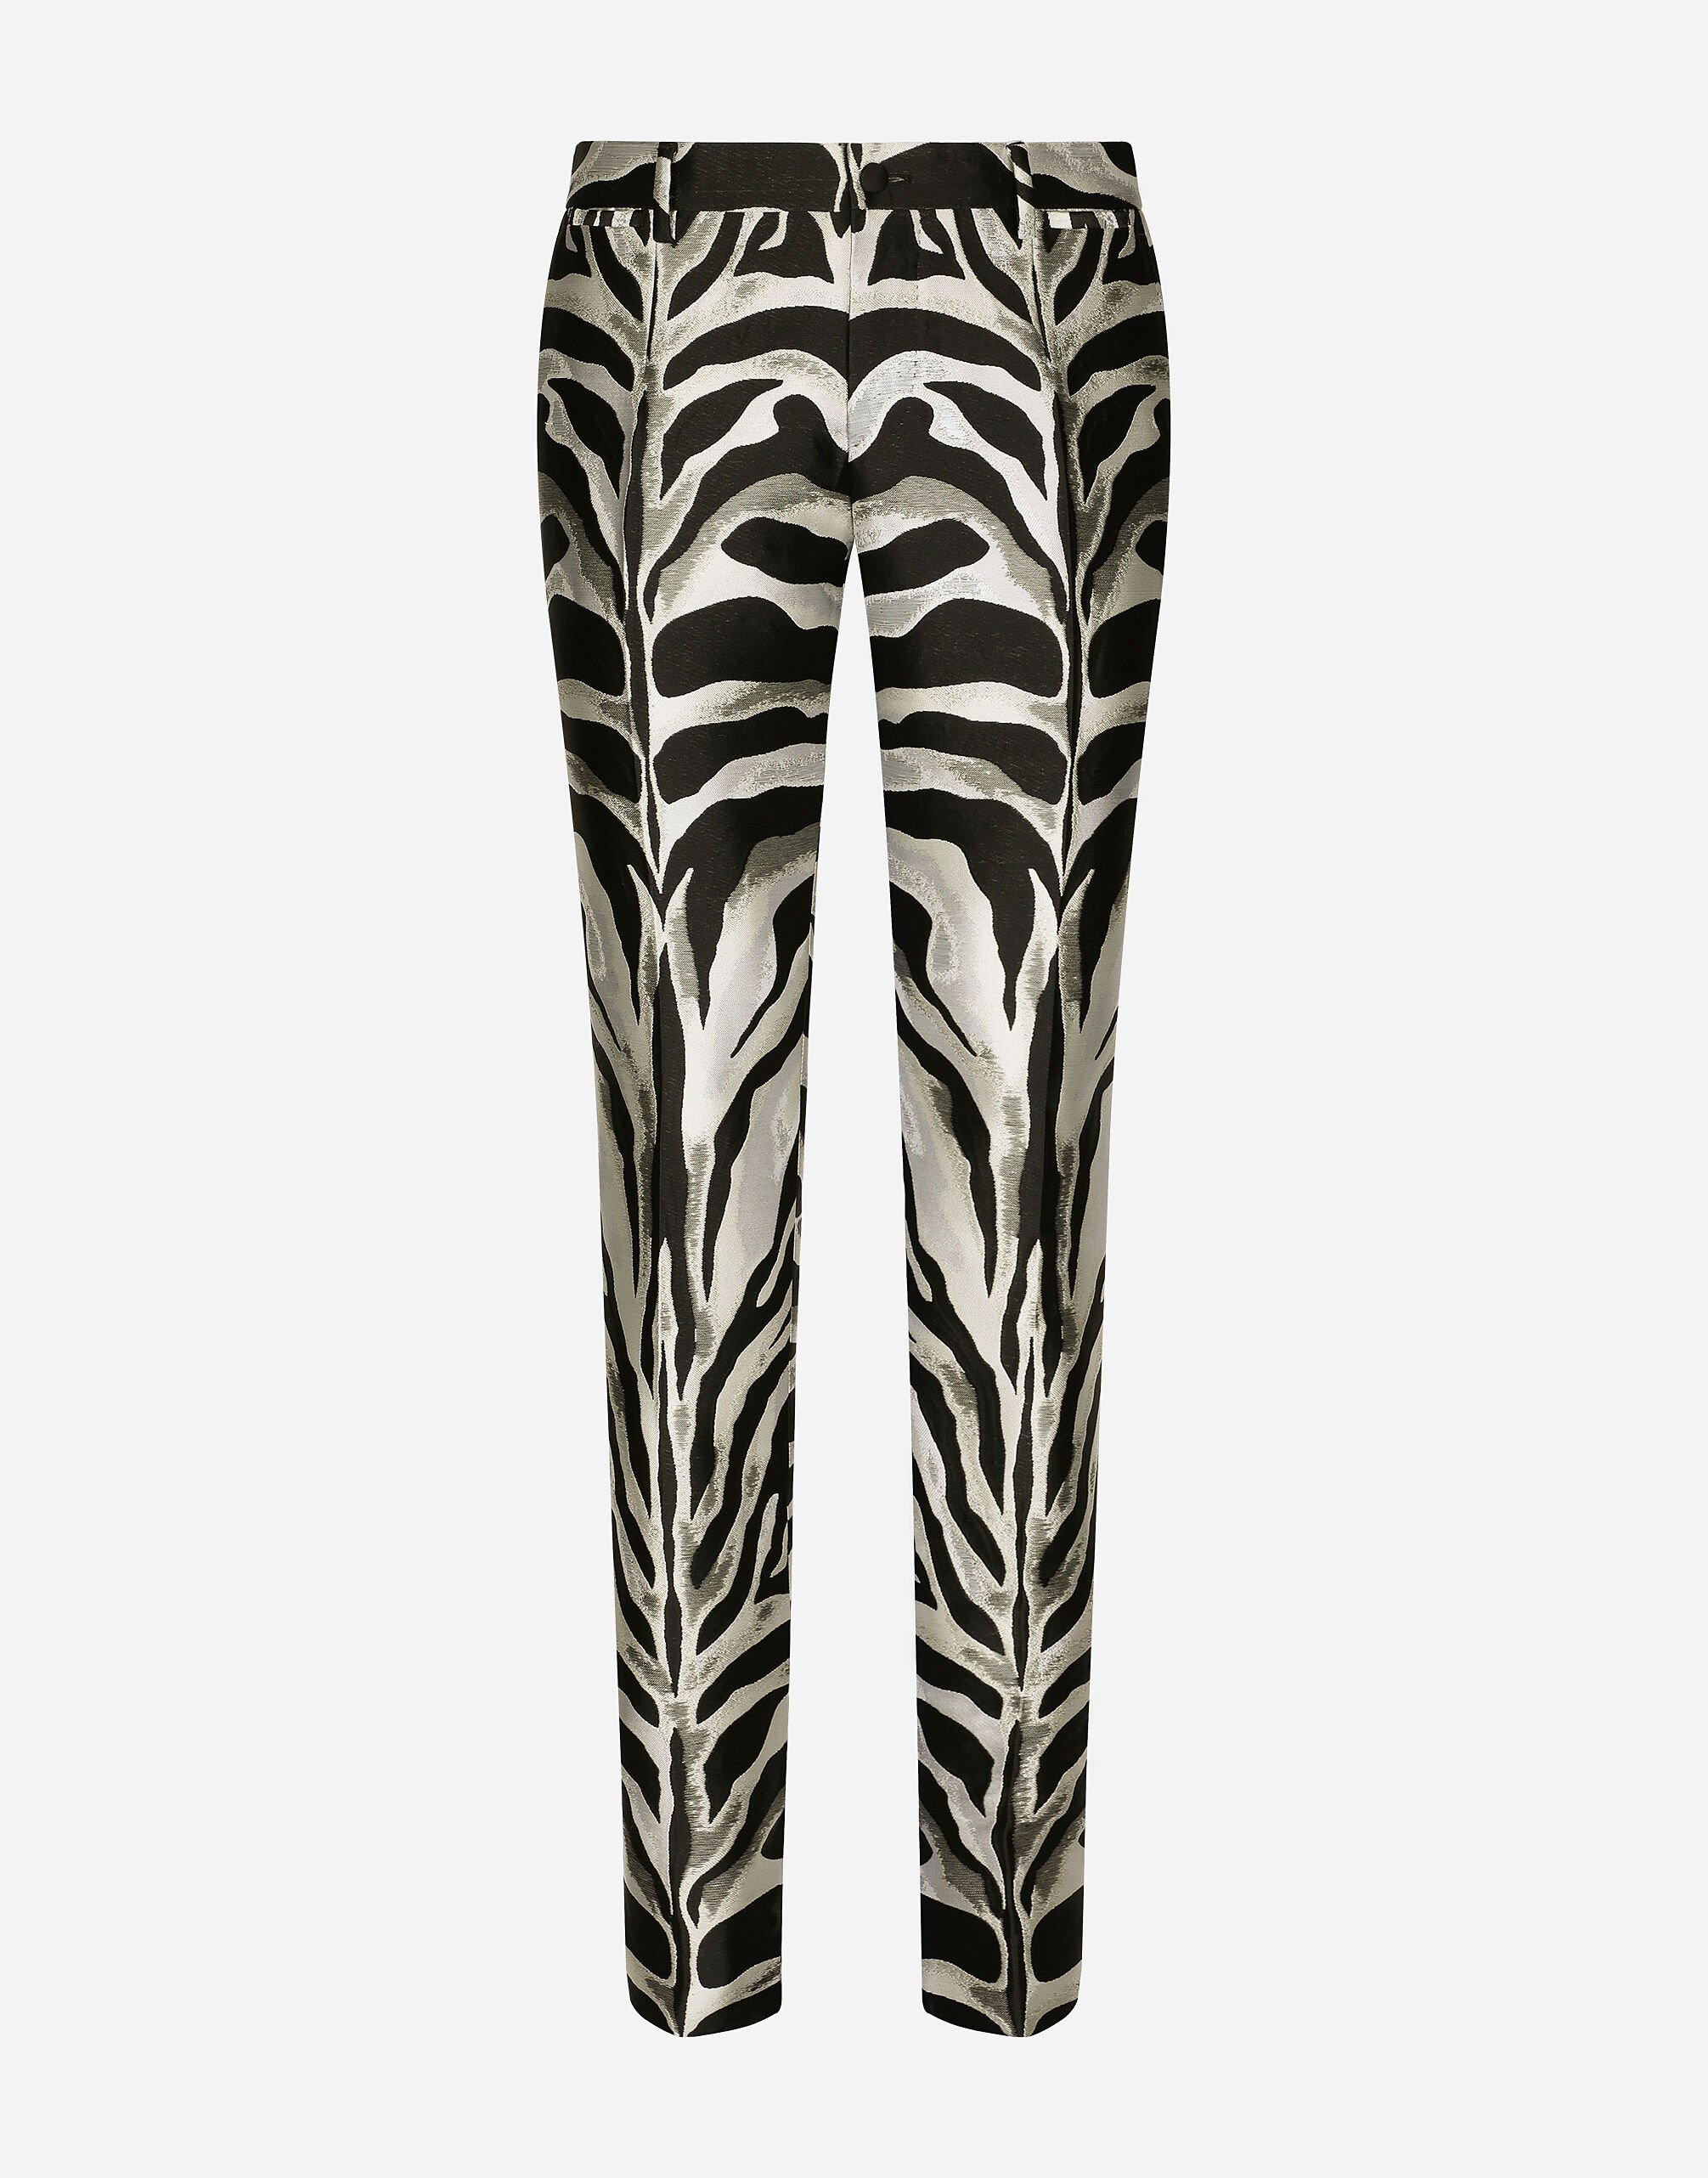 Lamé jacquard pants with zebra design in Multicolor for